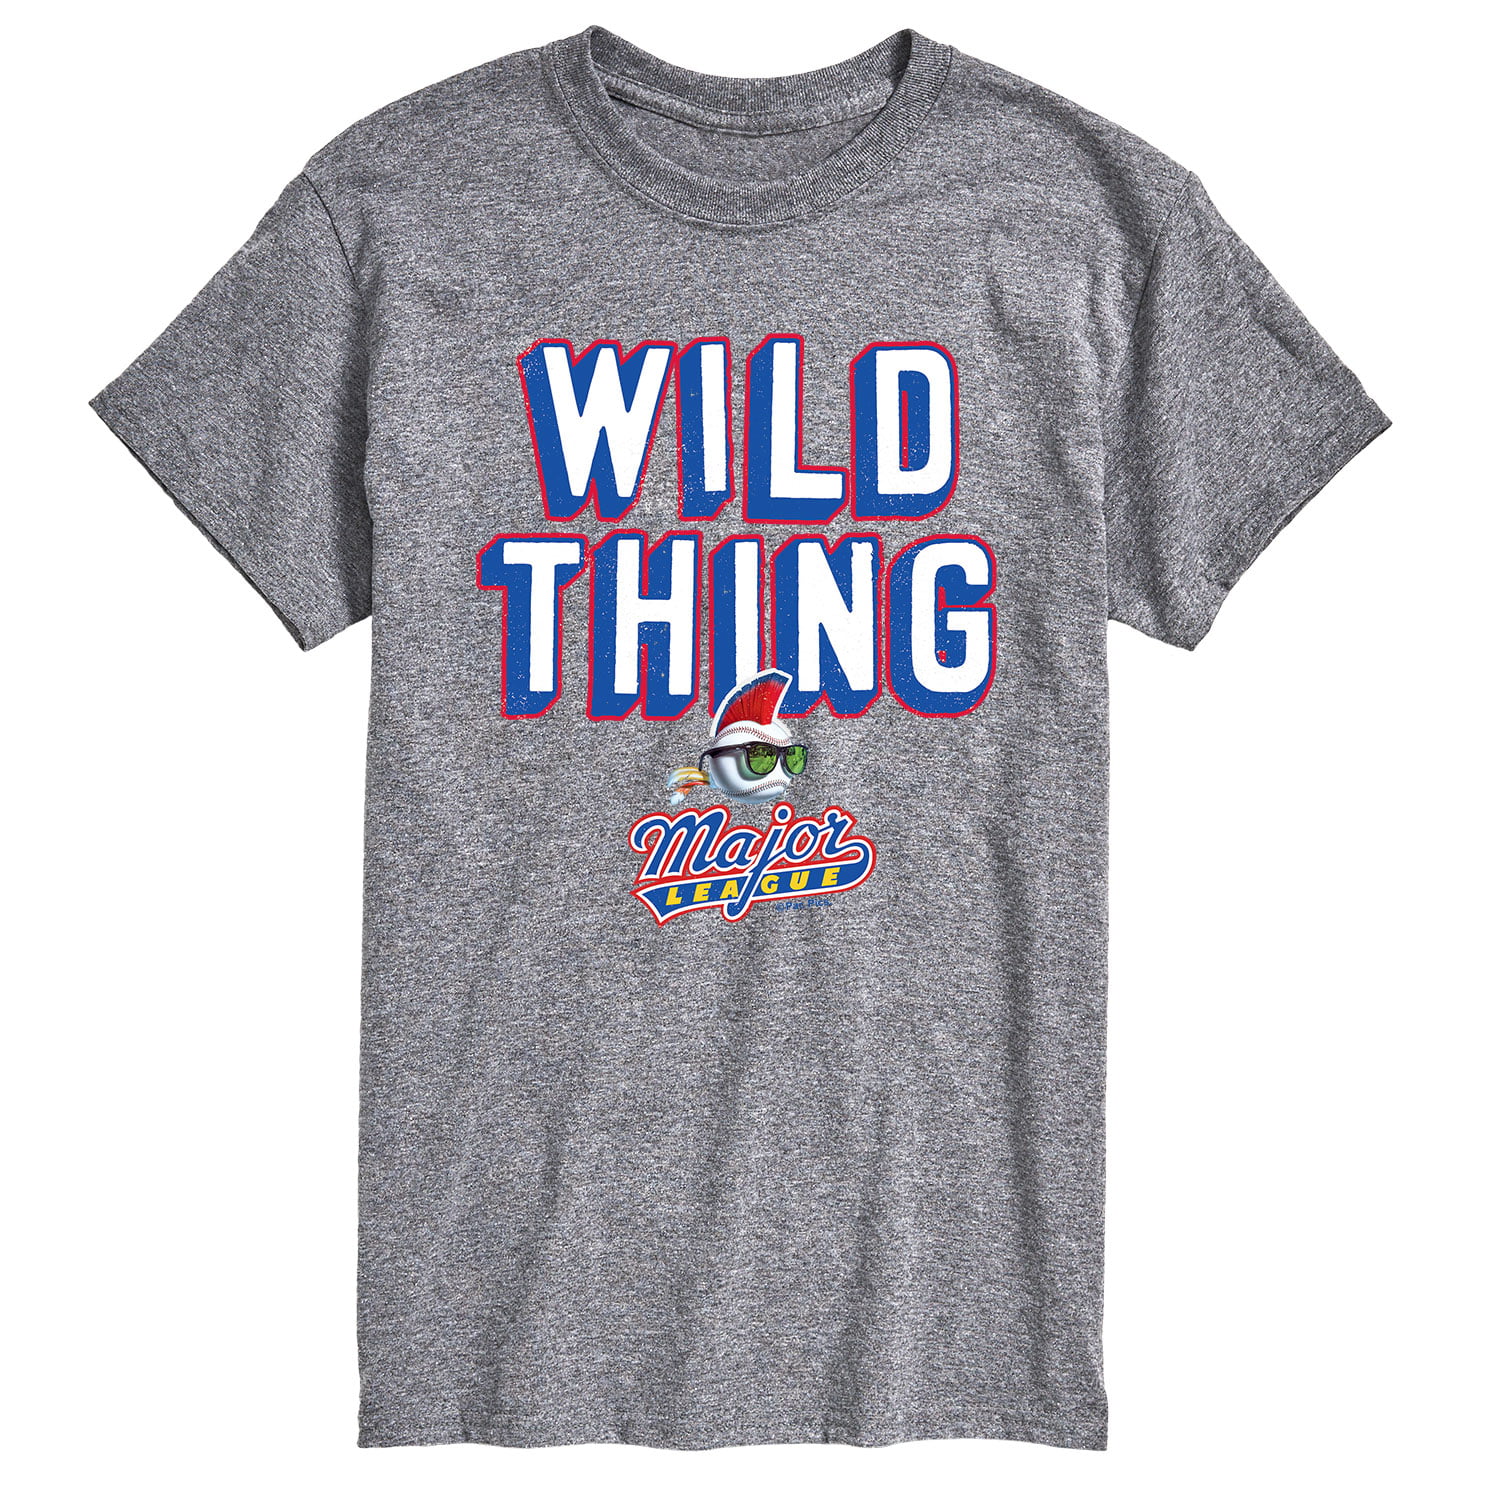 wild thing major league